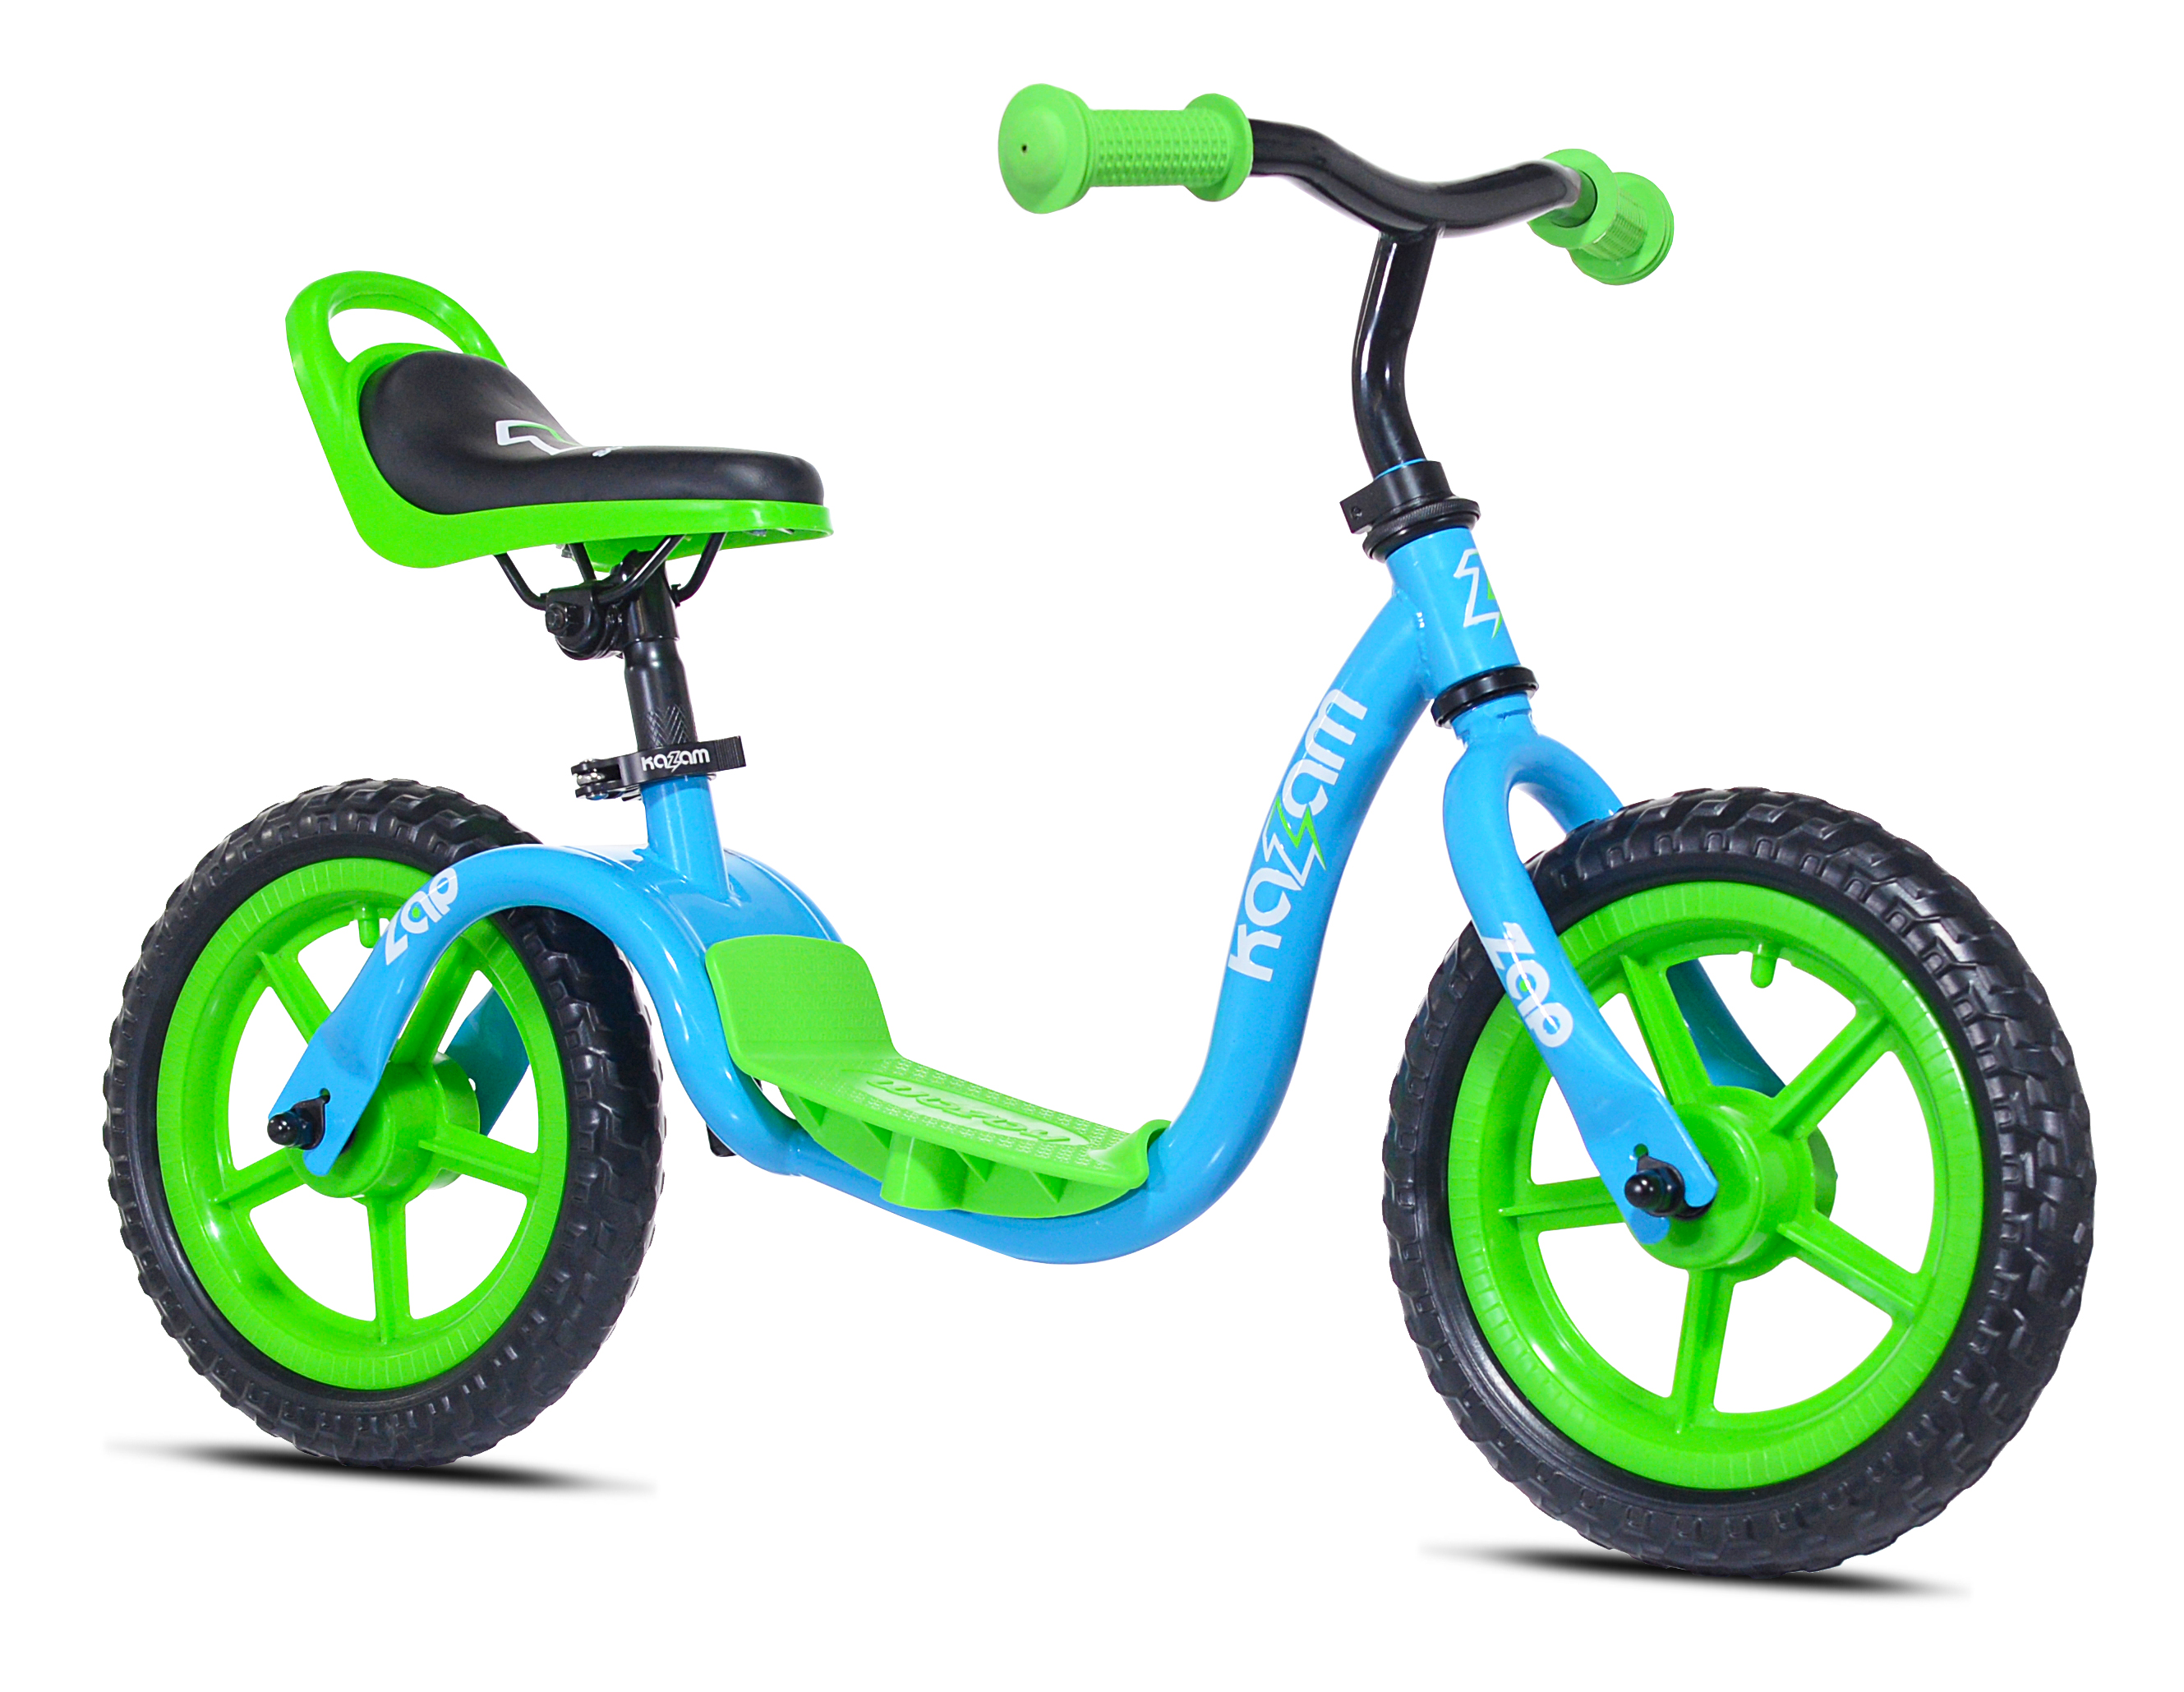 KaZAM 12" Child's Balance Bike and Helmet, Green/Blue - image 3 of 9